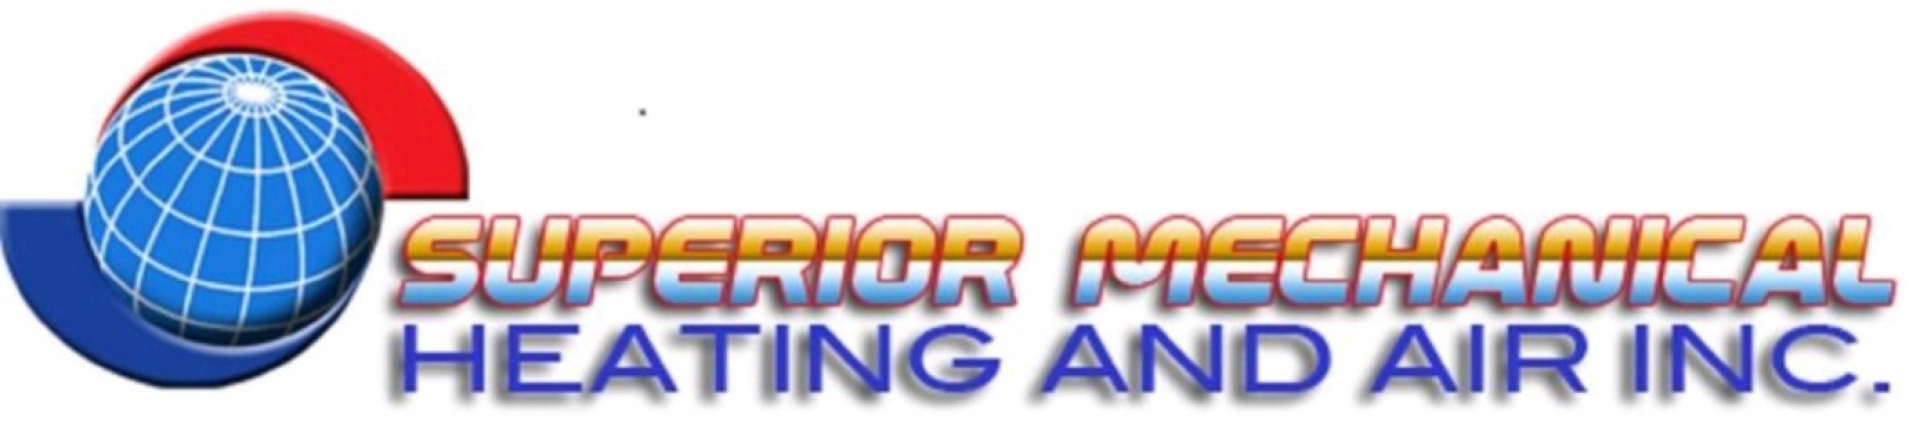 Superior Mechanical Heating and Air Inc company logo